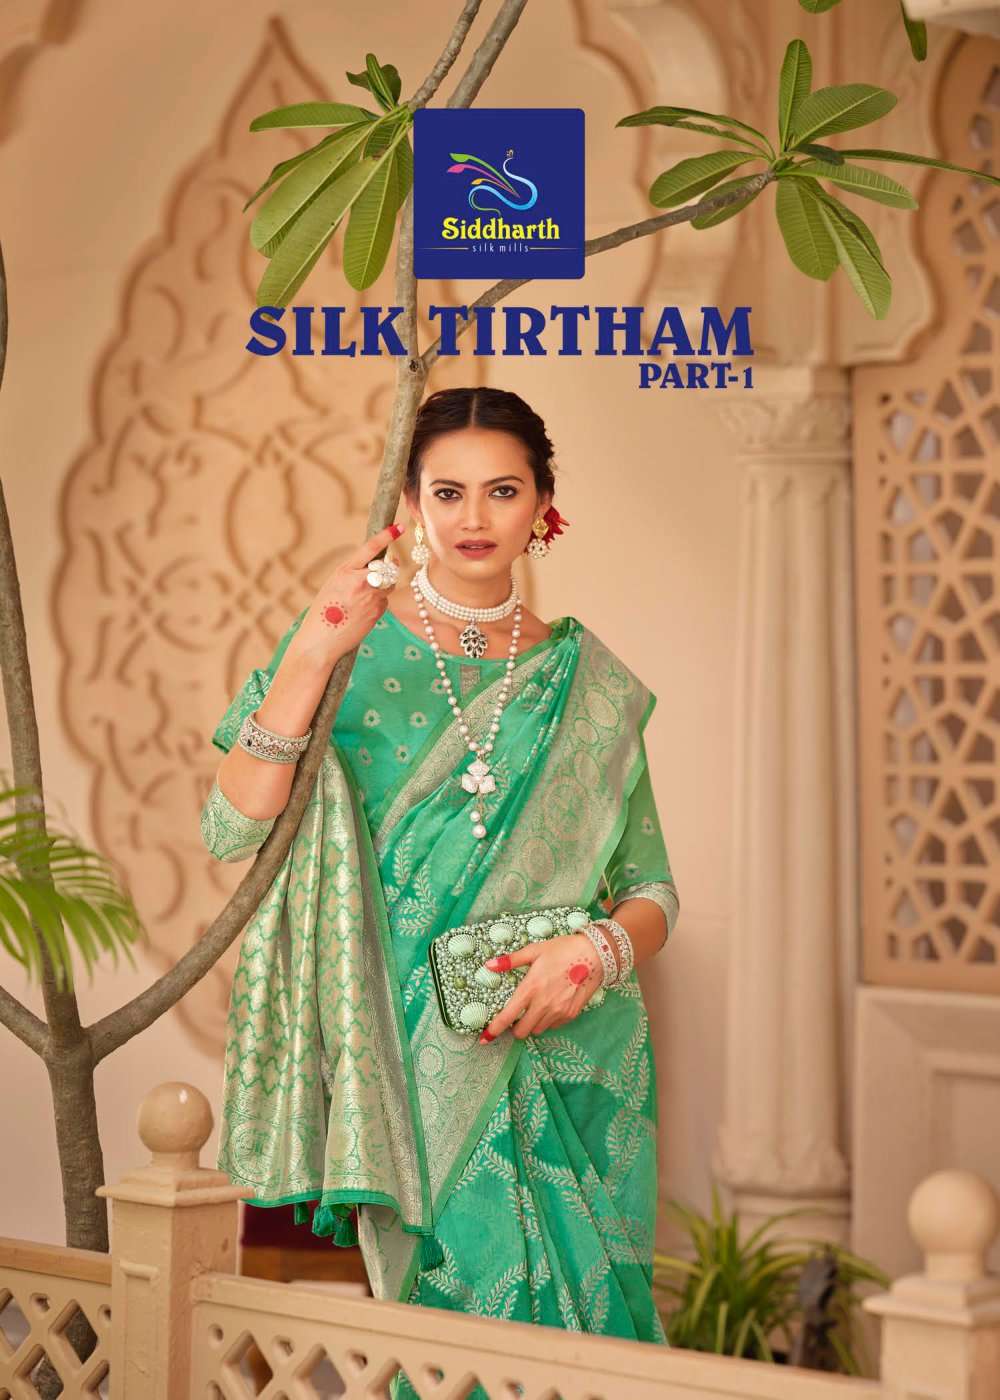 siddharth silk mills present silk tirtham vol 1 festive wear adorable saree supplier